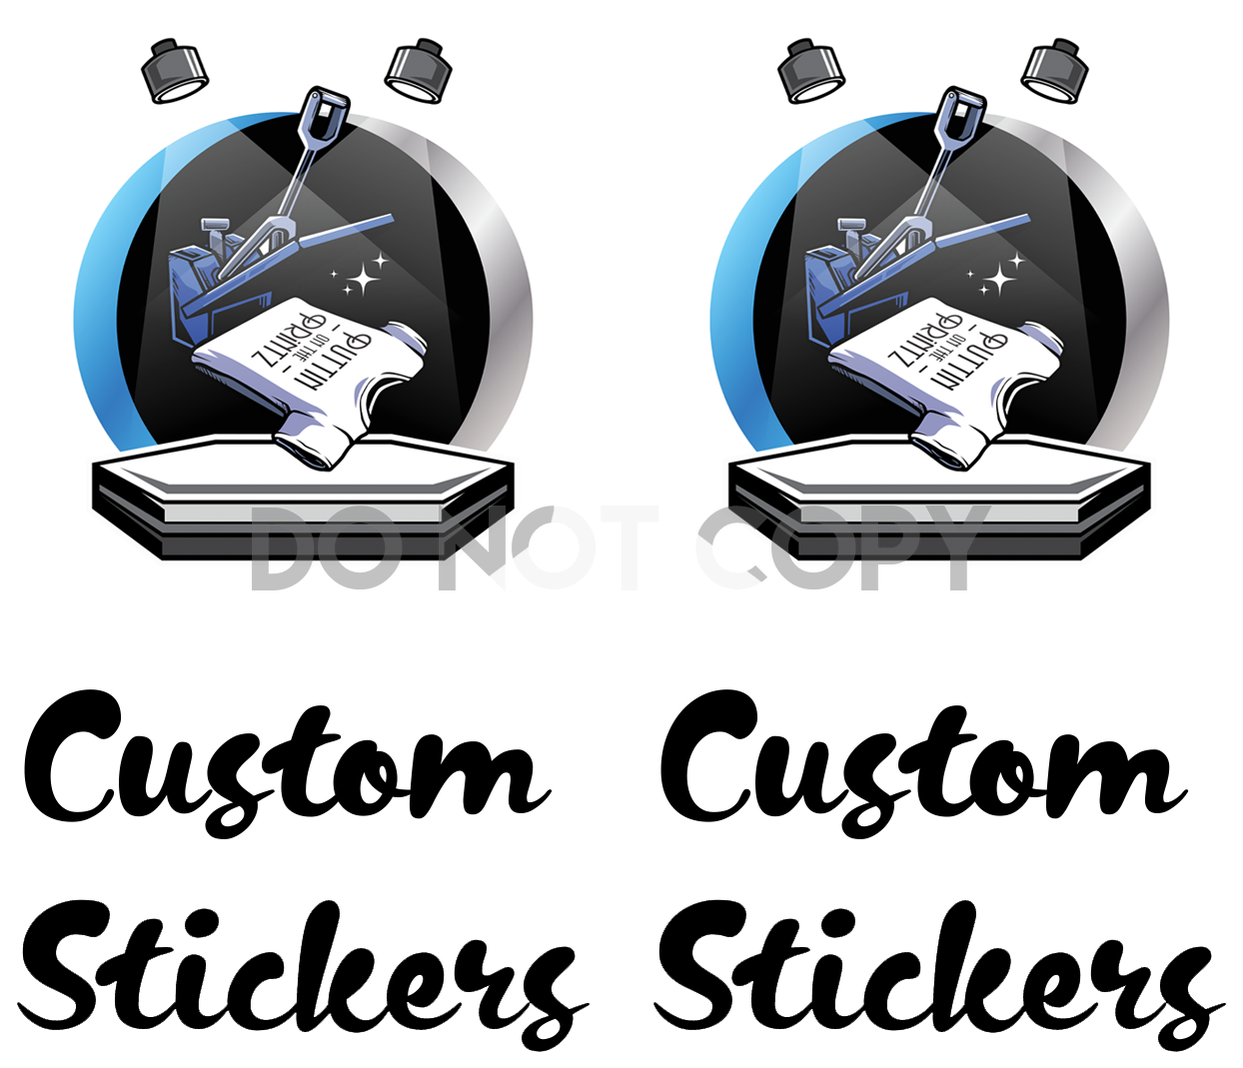 custom 2" logo sticker upload your file -10 Glossy Stickers per sheet